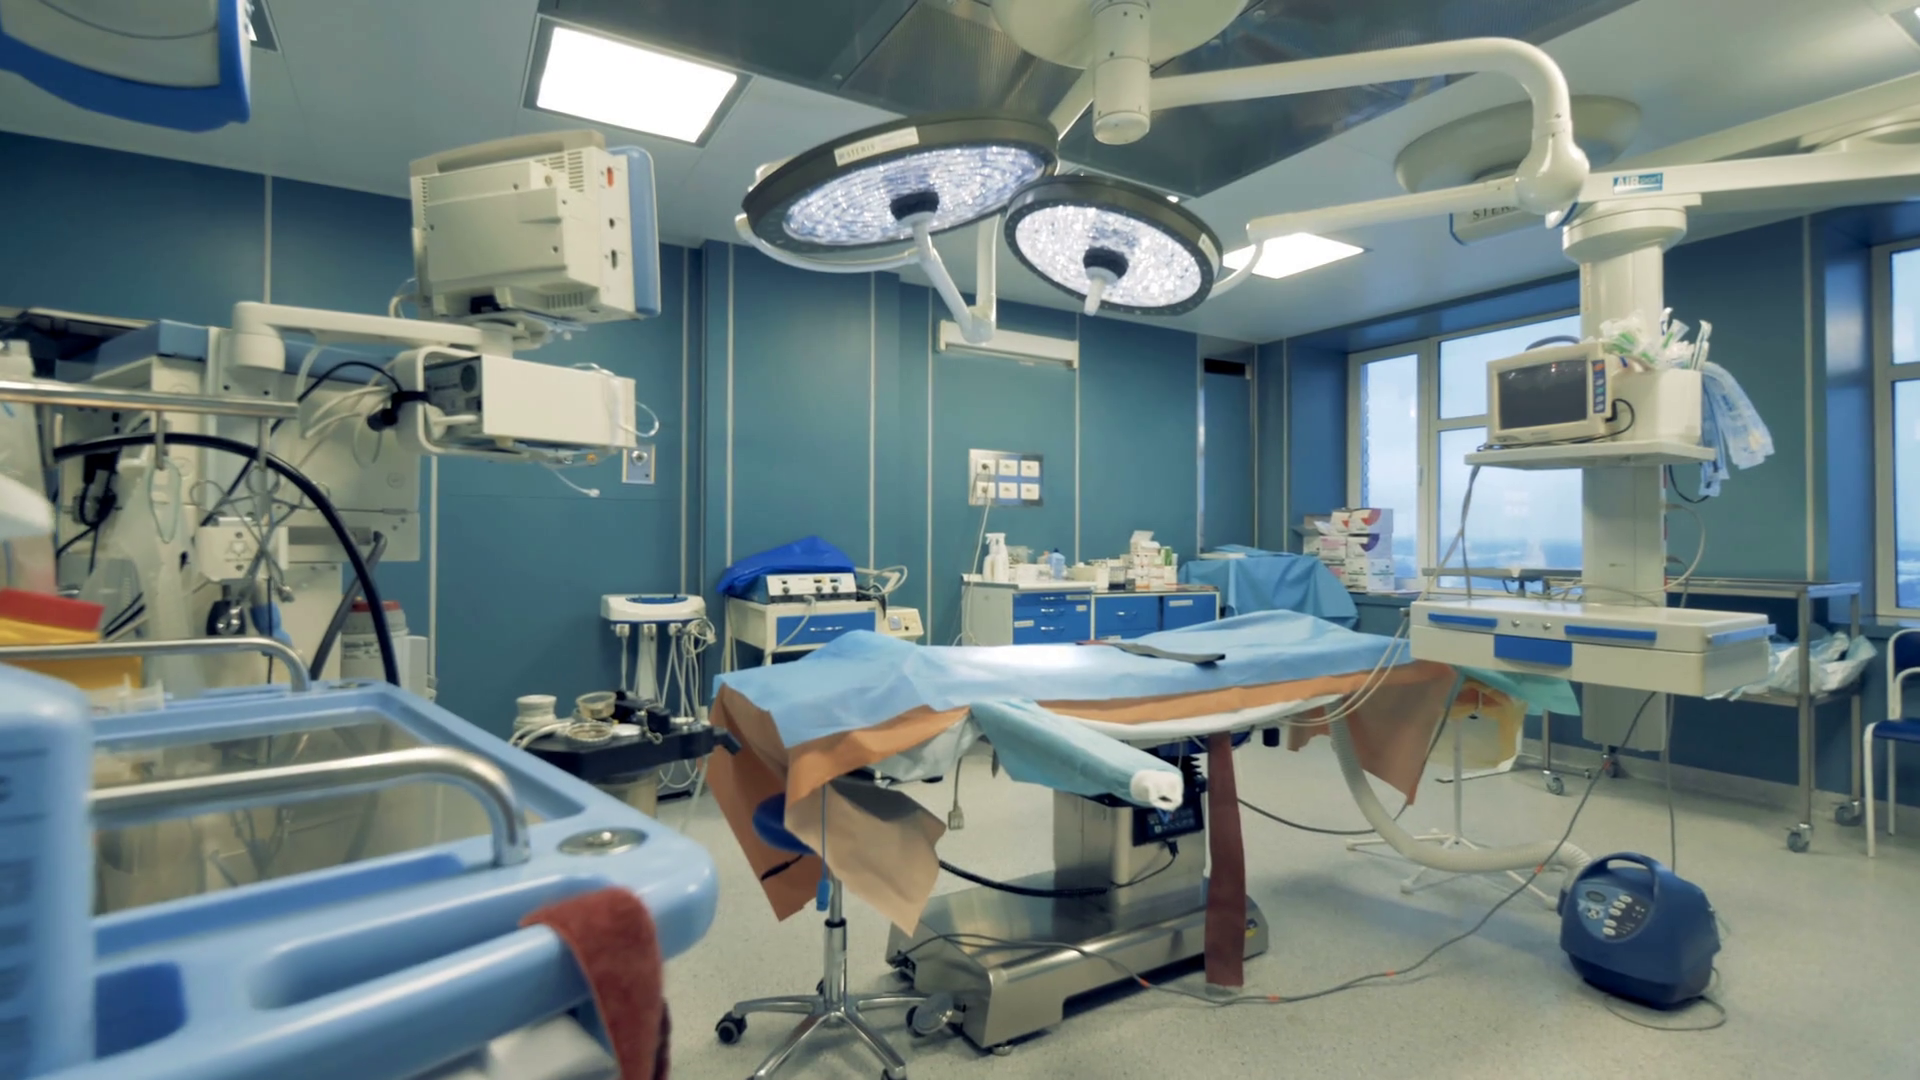 Surgicalroom 